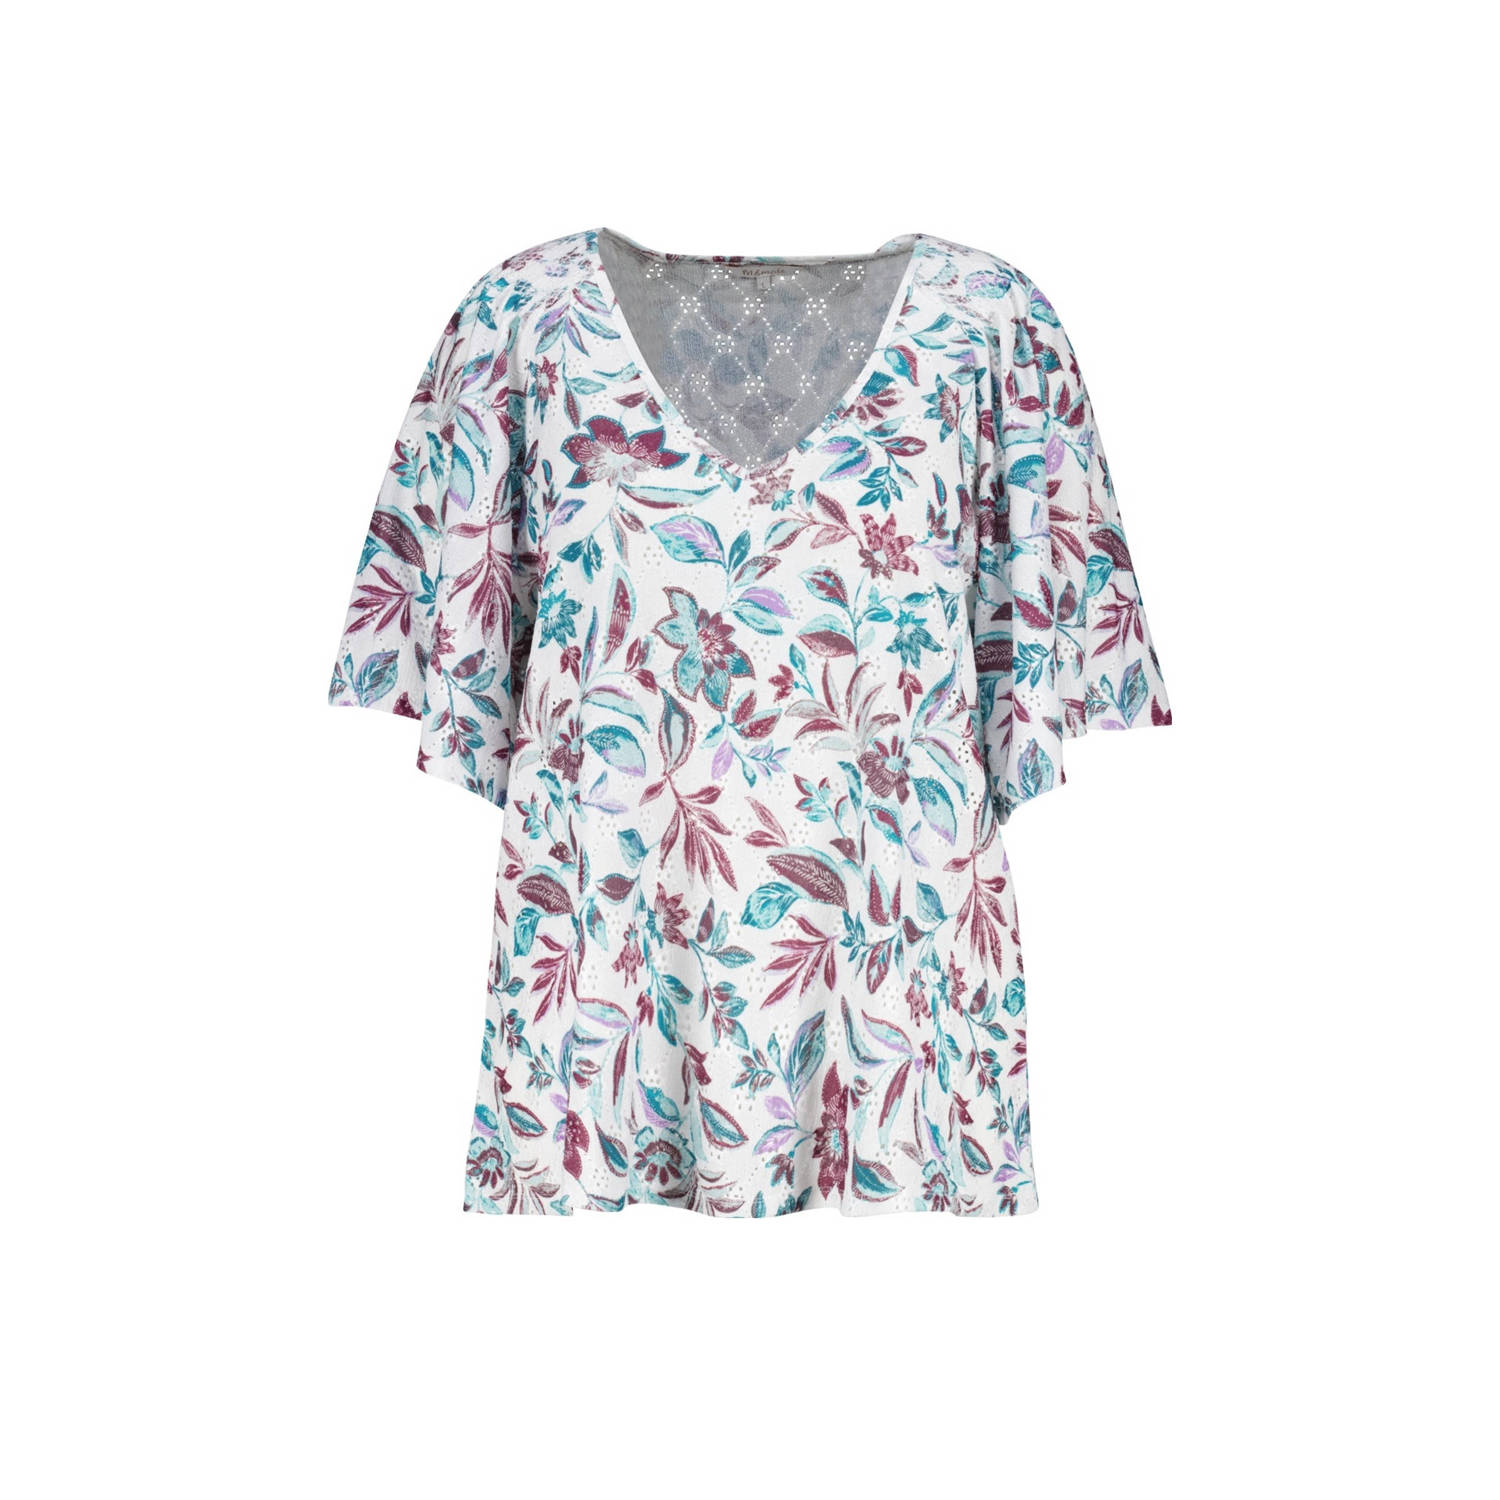 MS Mode gebloemd T-shirt lichtblauw wit roze